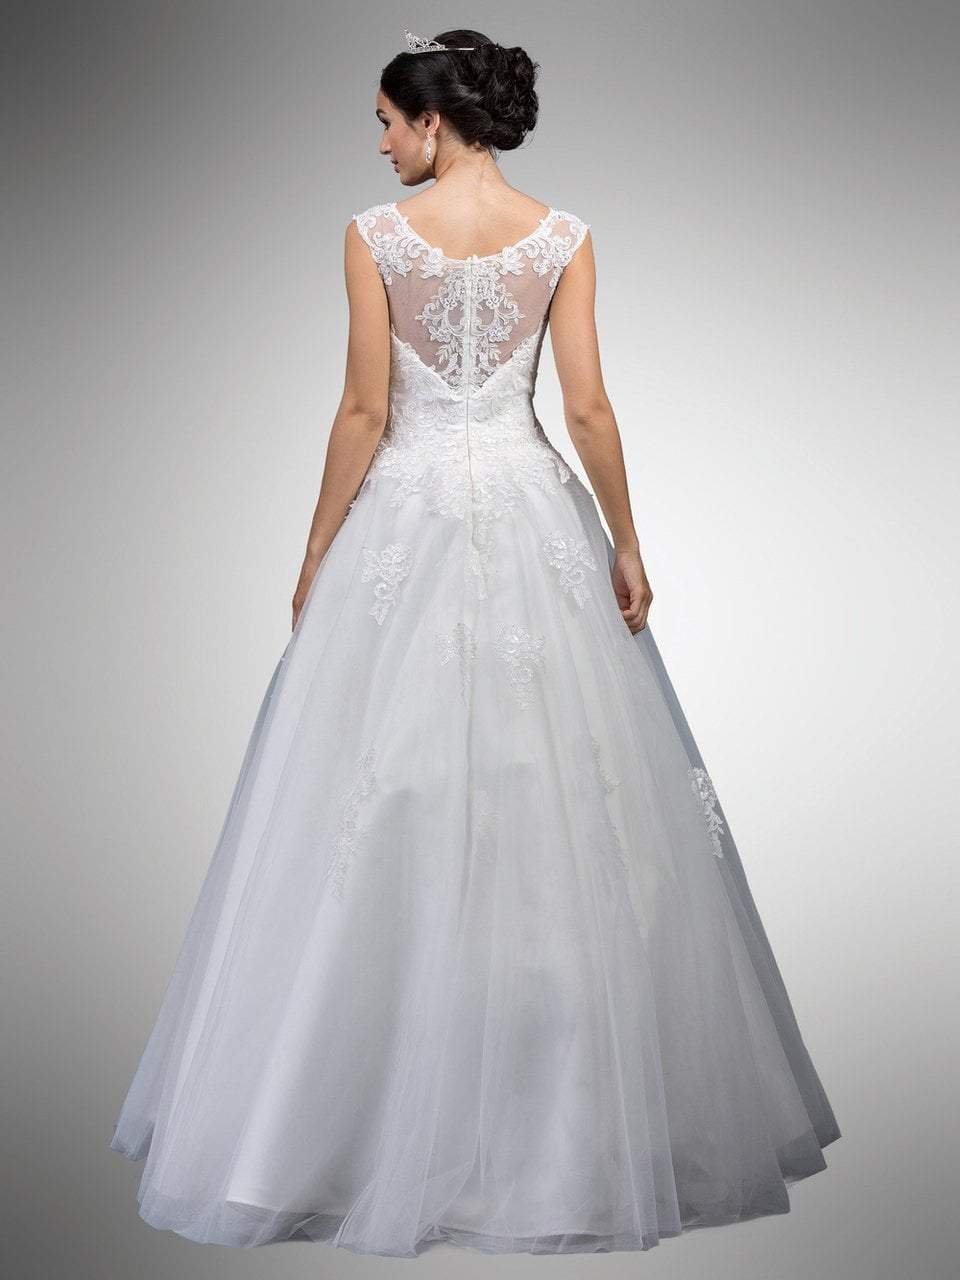 Dancing Queen Bridal - A7002 Embellished Lace Illusion Bateau Ballgown Bridal Dresses